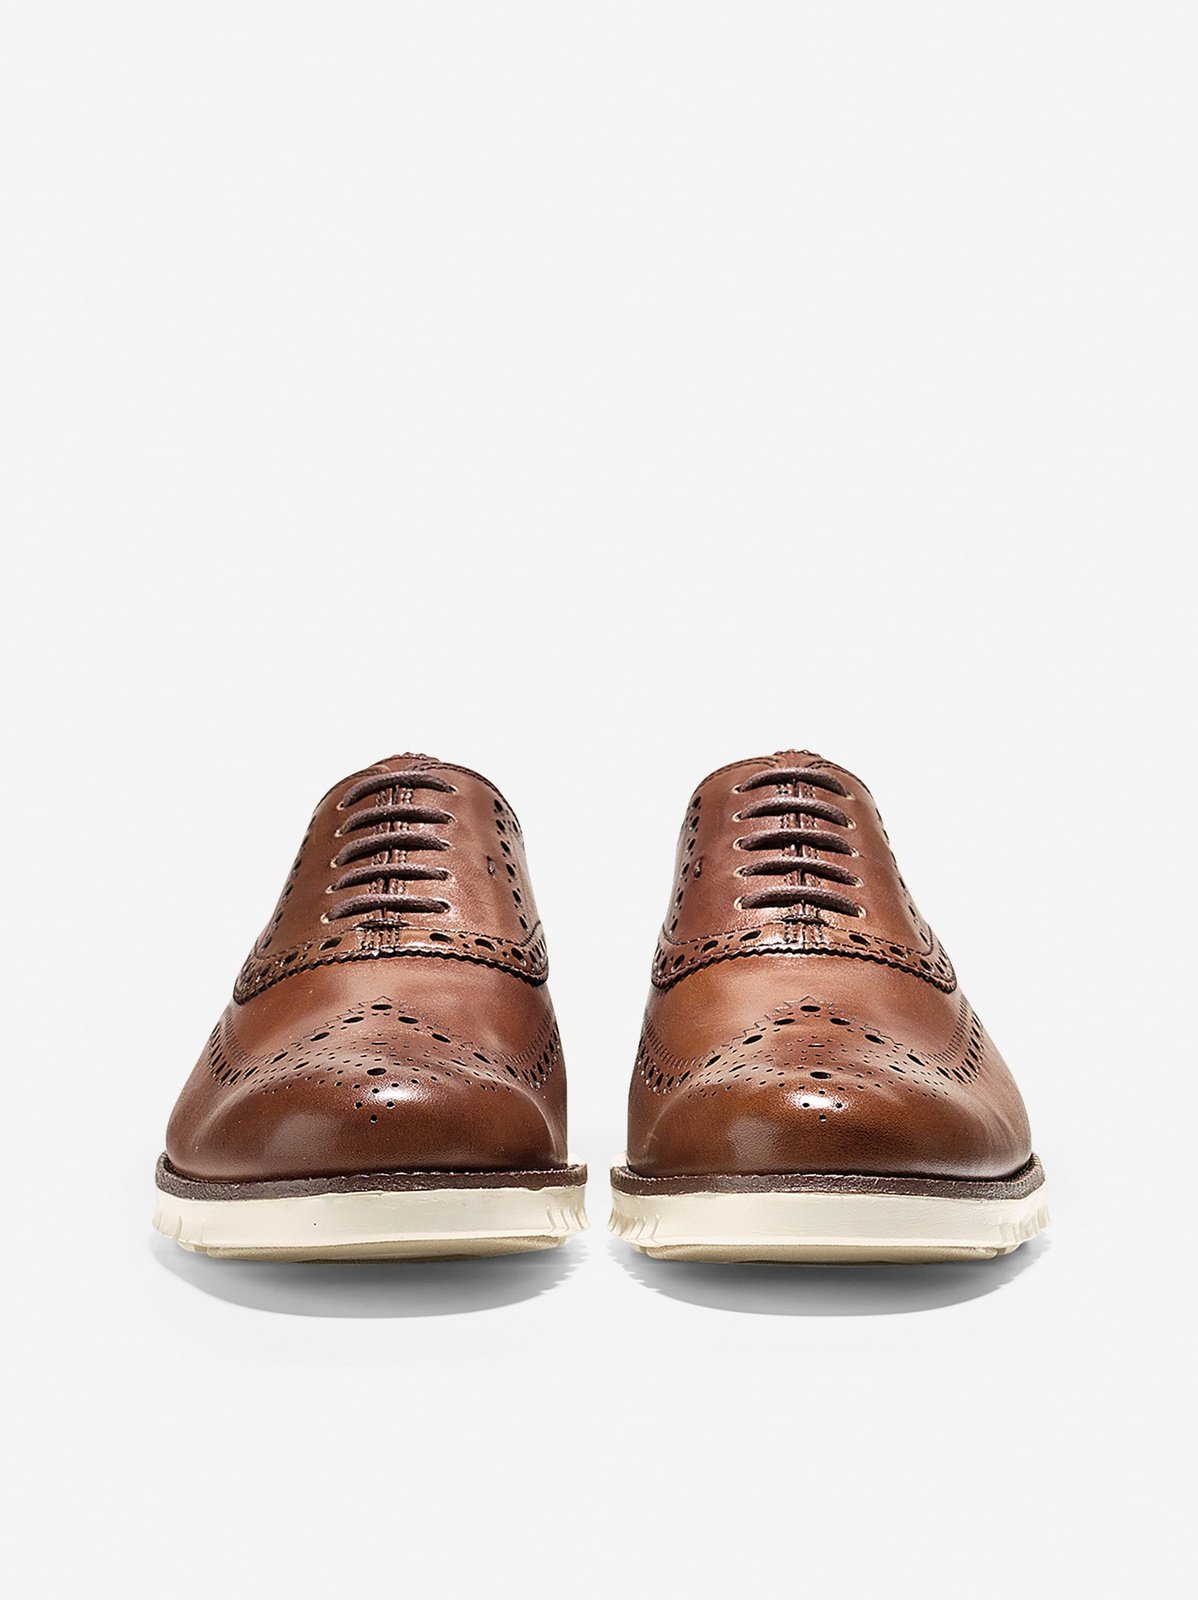 Cole Haan Men's Zerogrand Wing Oxford Shoes BritishTan C14493.